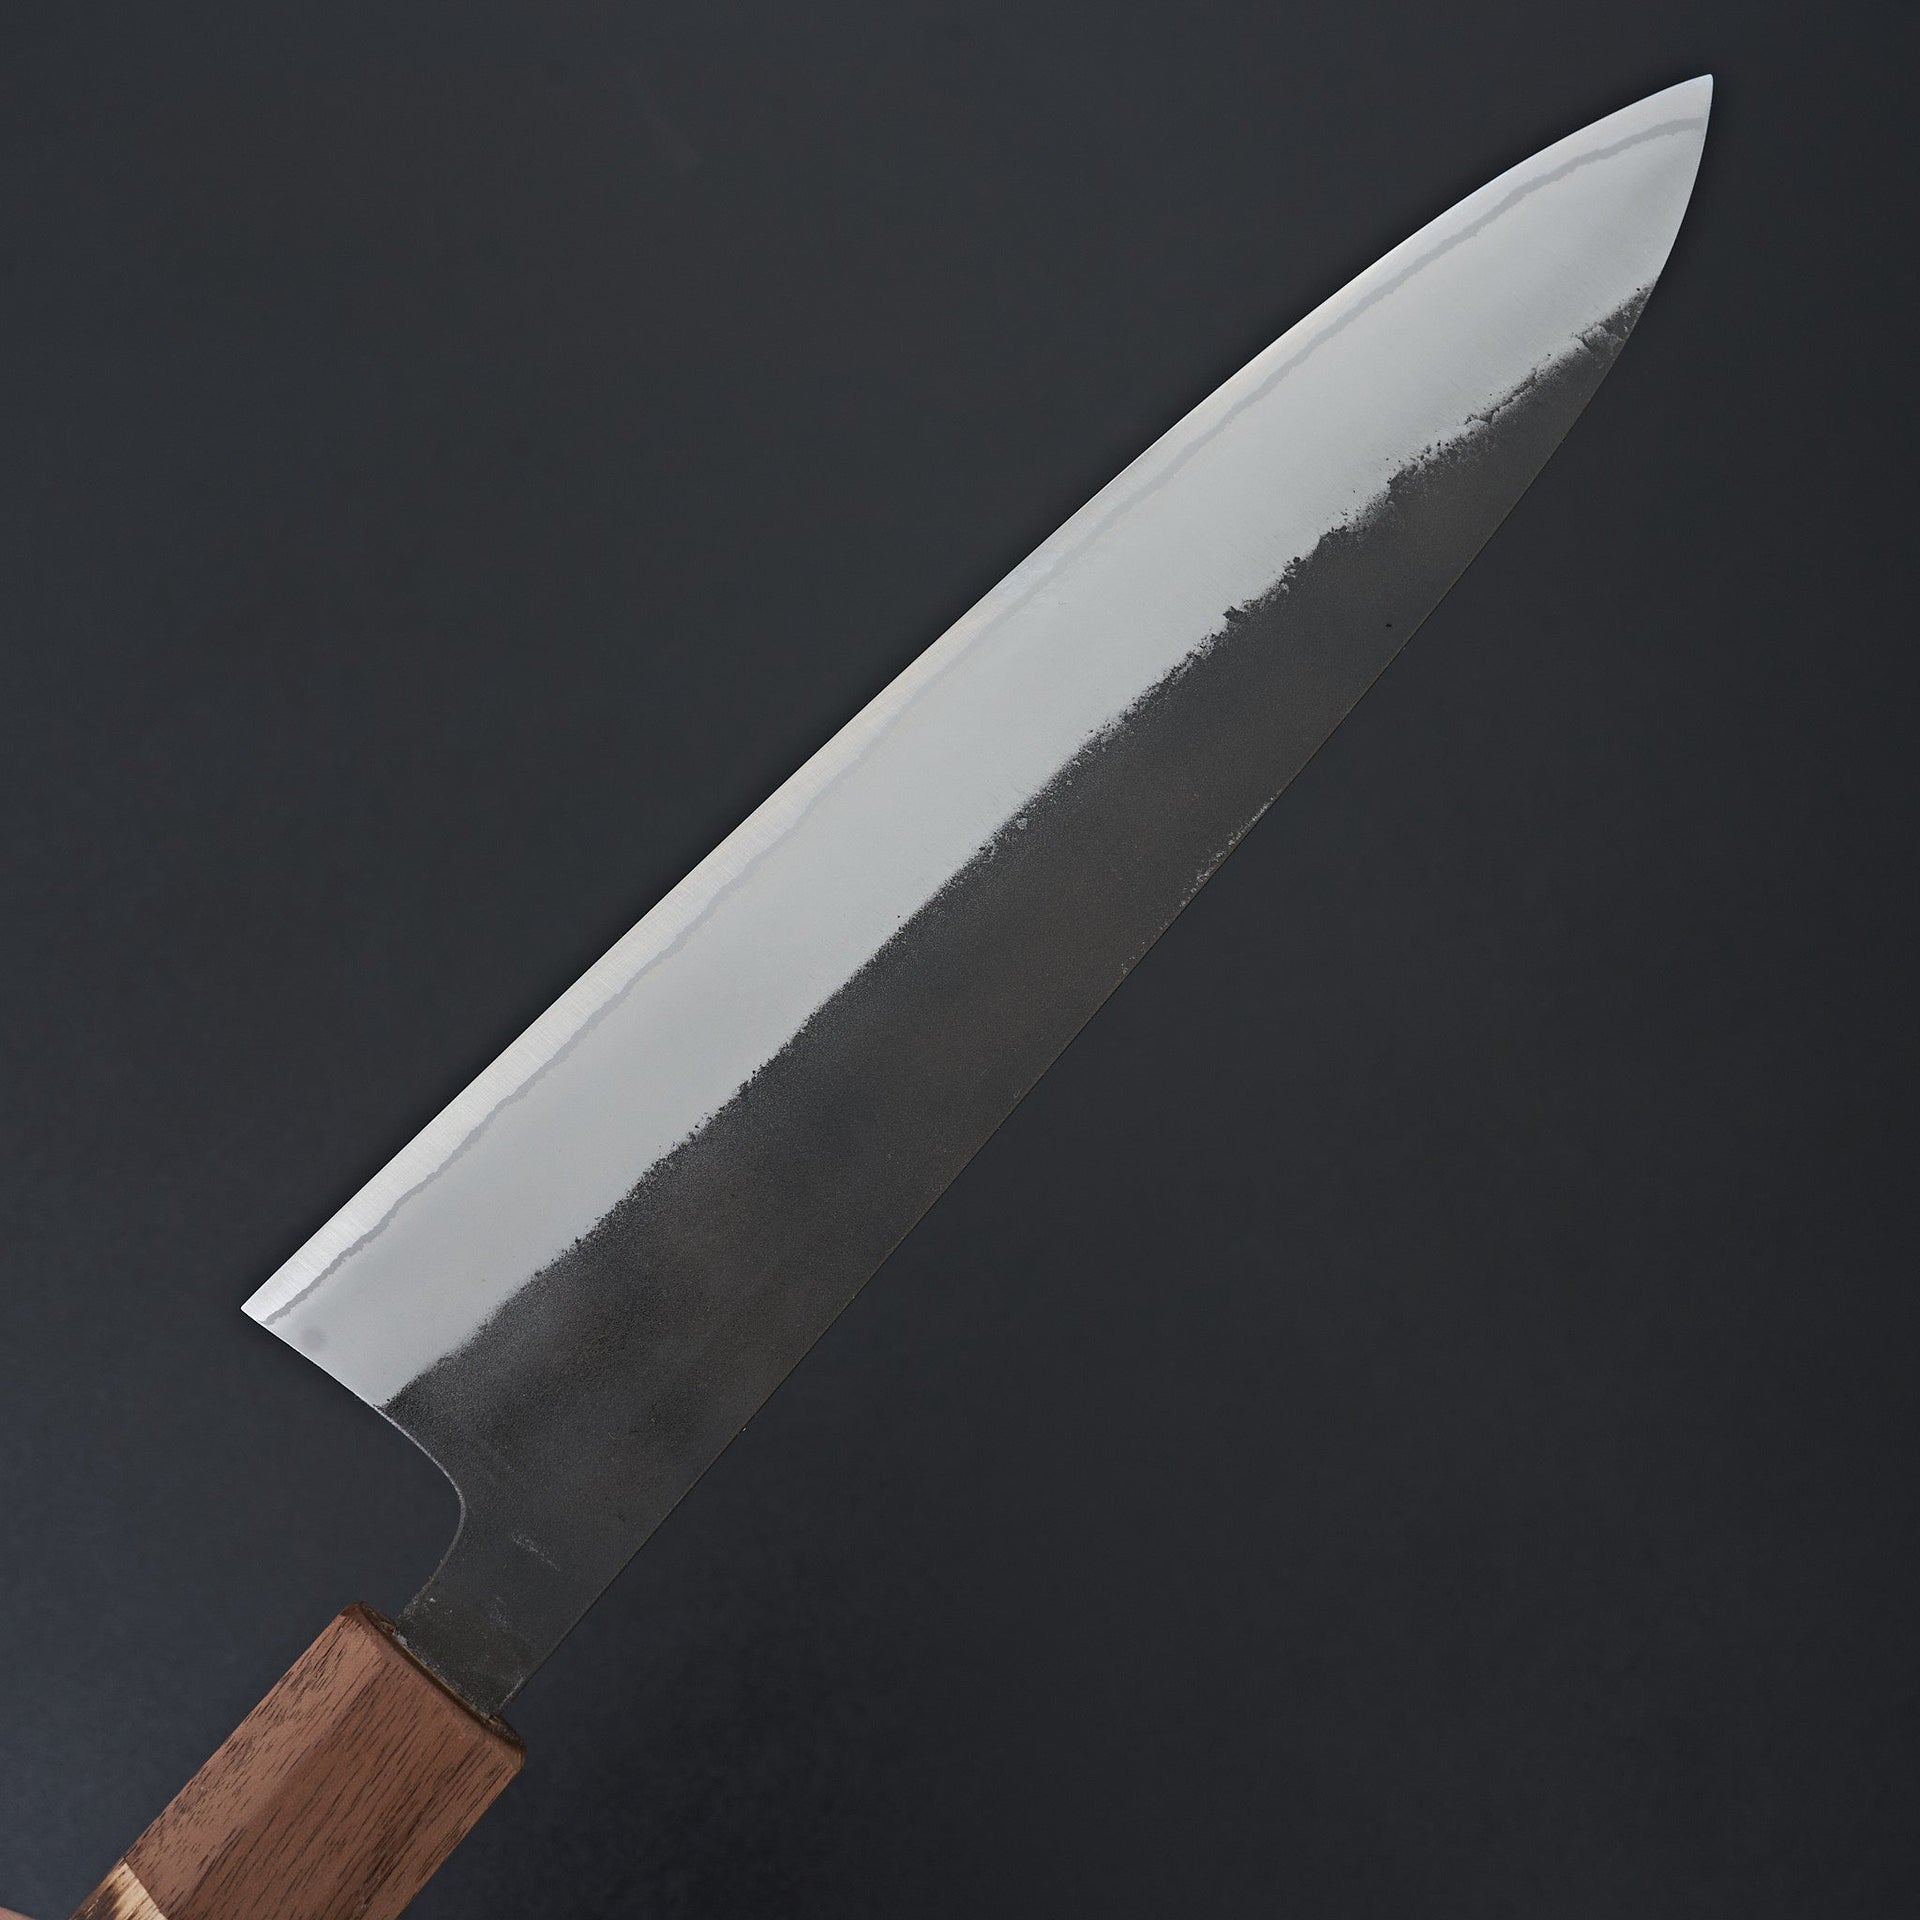 Nihei White #2 Stainless Clad Gyuto 240mm-Knife-Nihei-Carbon Knife Co